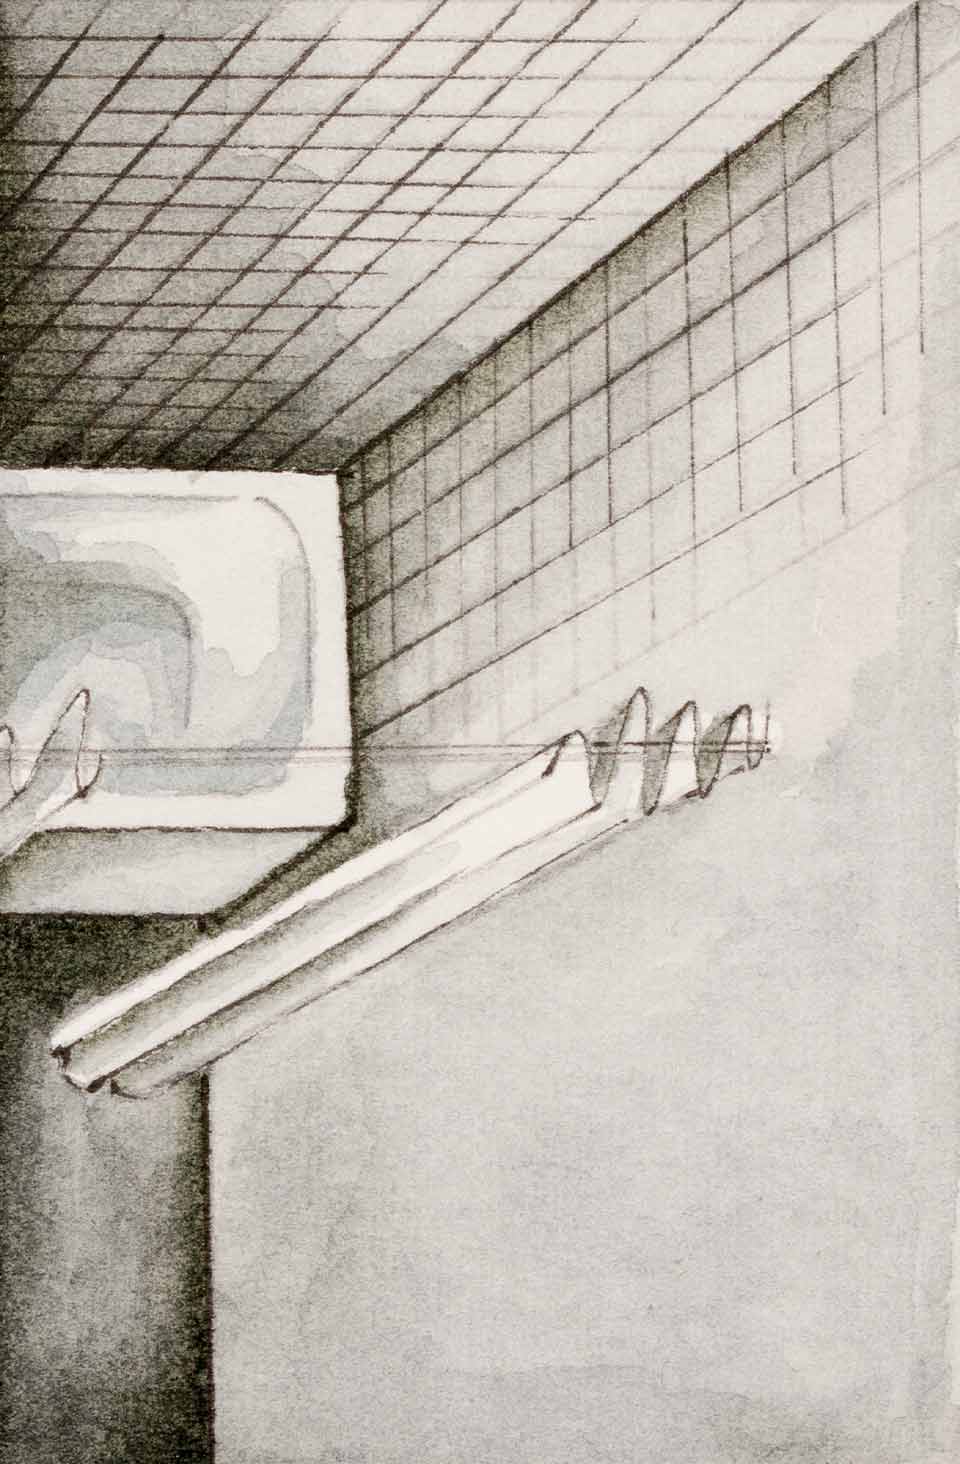 An illustration on the interior of a bathroom